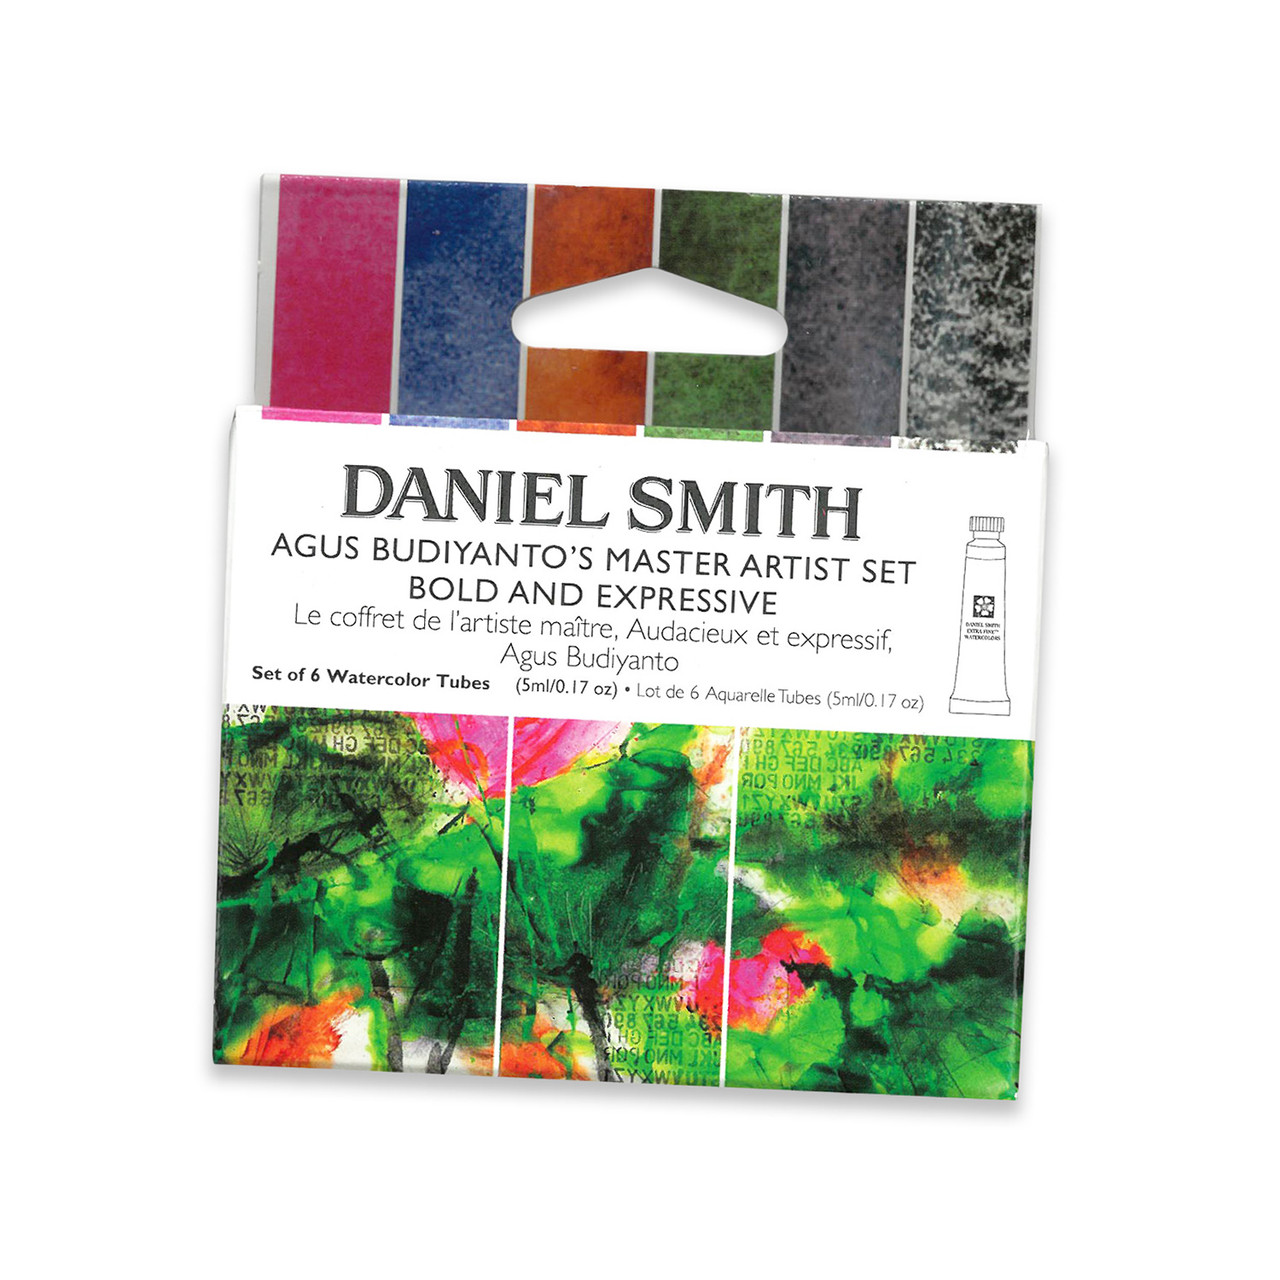 Daniel Smith Extra Fine Watercolors | 5ml tubes